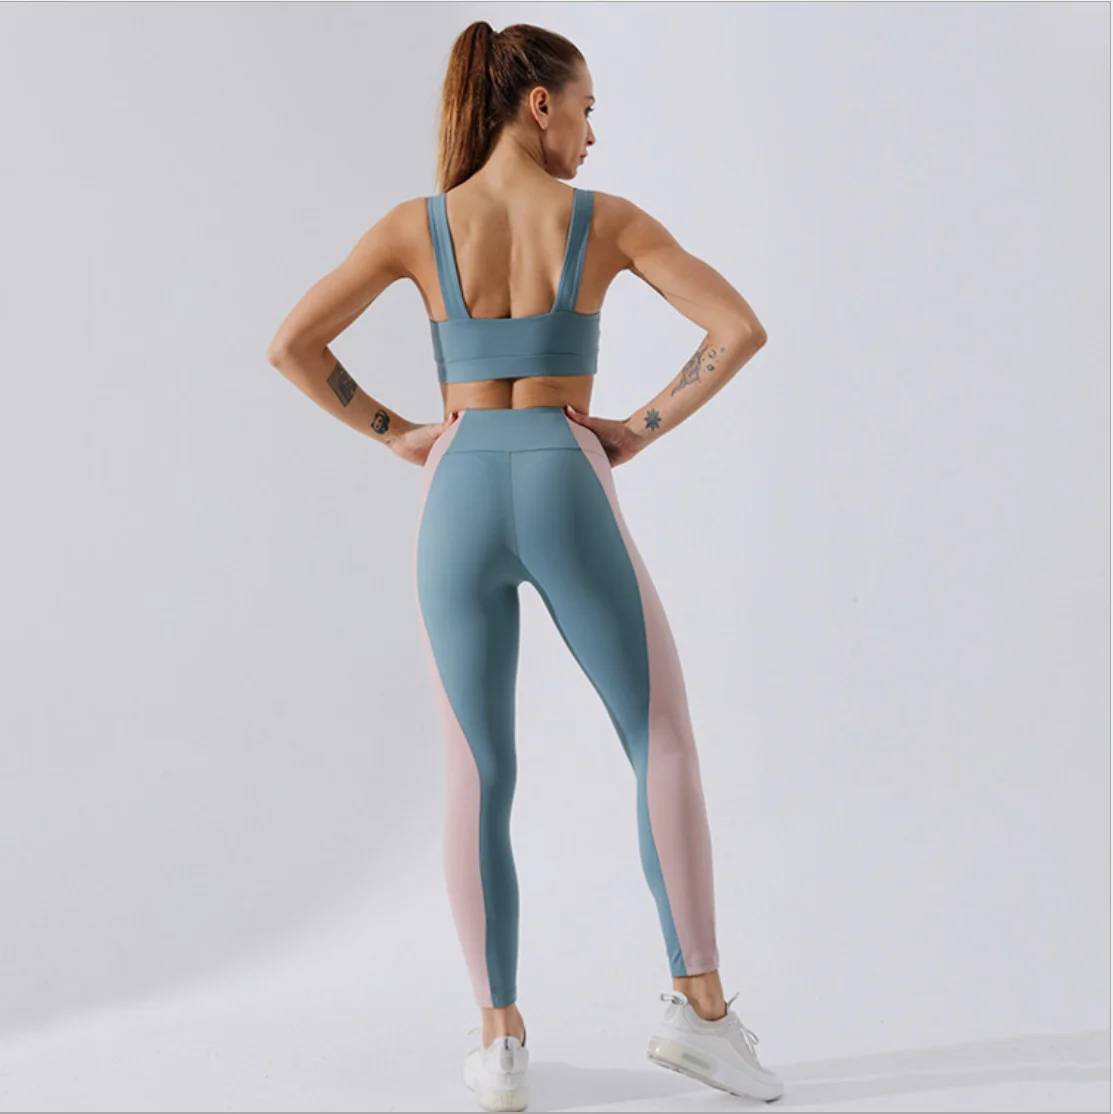 Female Sport Suit Women Fitness Clothing Sport Wear Yoga Set Gym Jogging Suits Sportswear